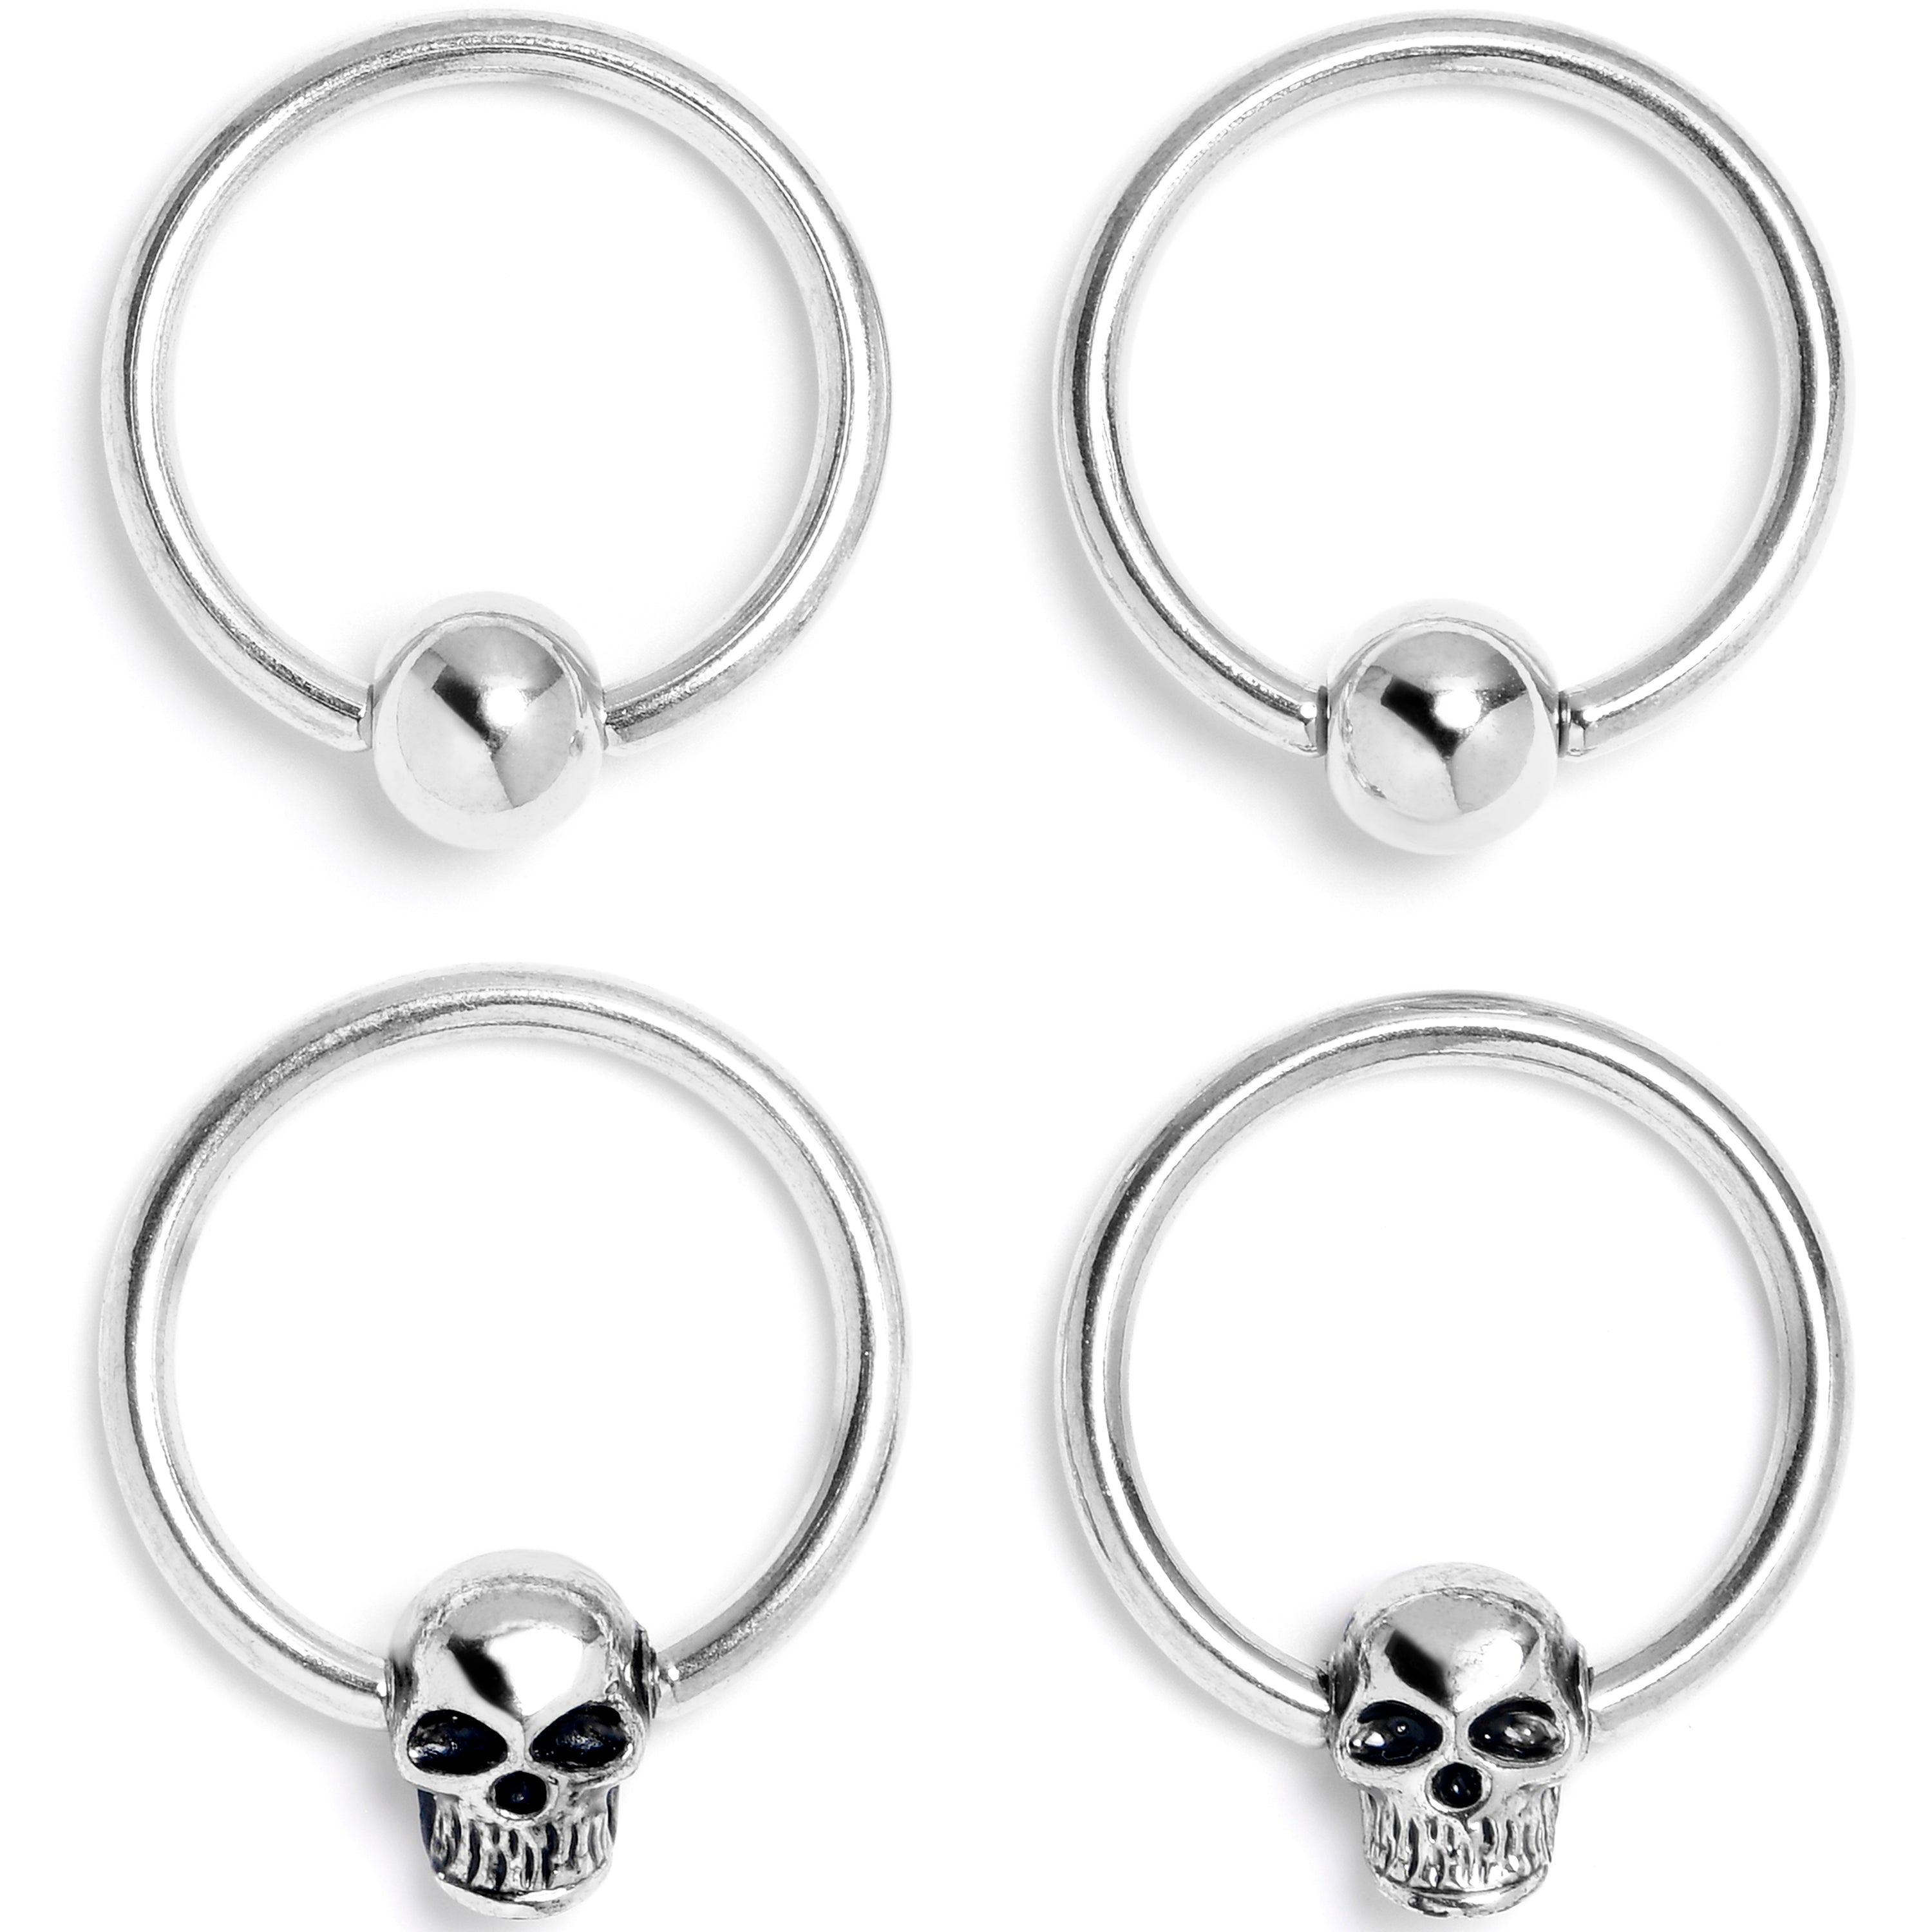 16 Gauge 3/8 Gothic Skulls BCR Captive Ring Set of 4